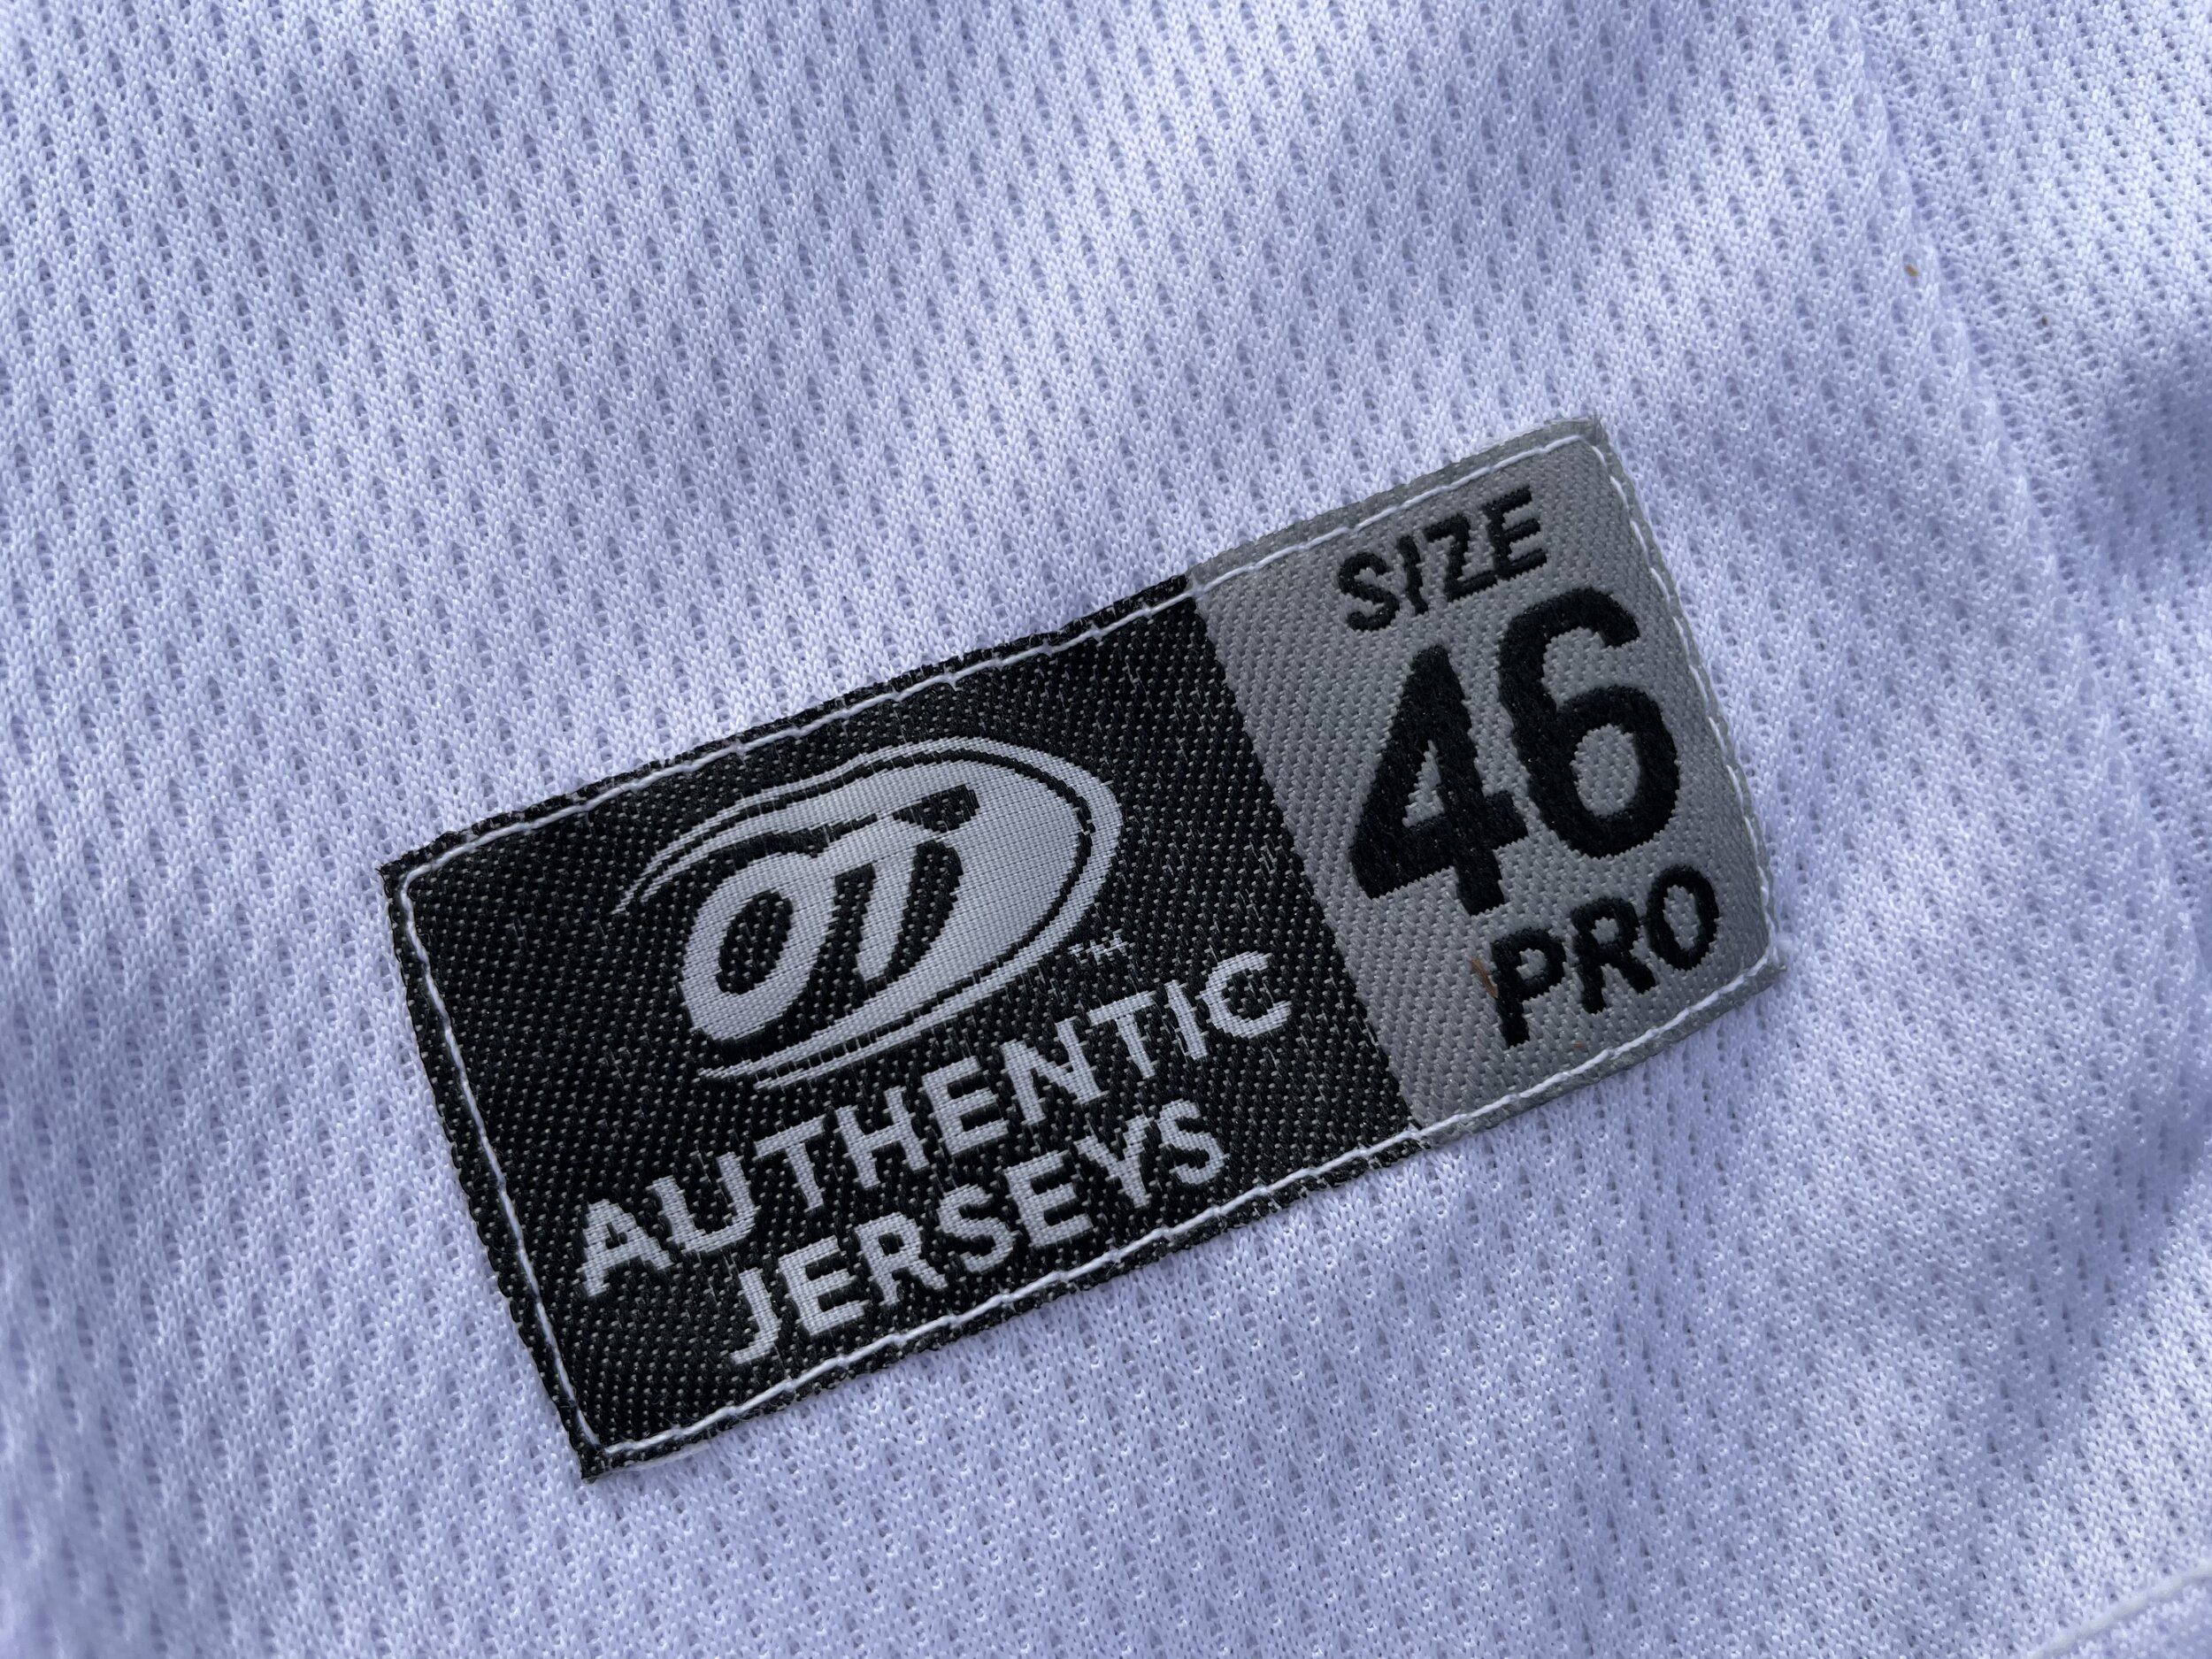 OT Wear Custom Jerseys  The premier provider of truly custom jerseys for  college and high school fishing teams.